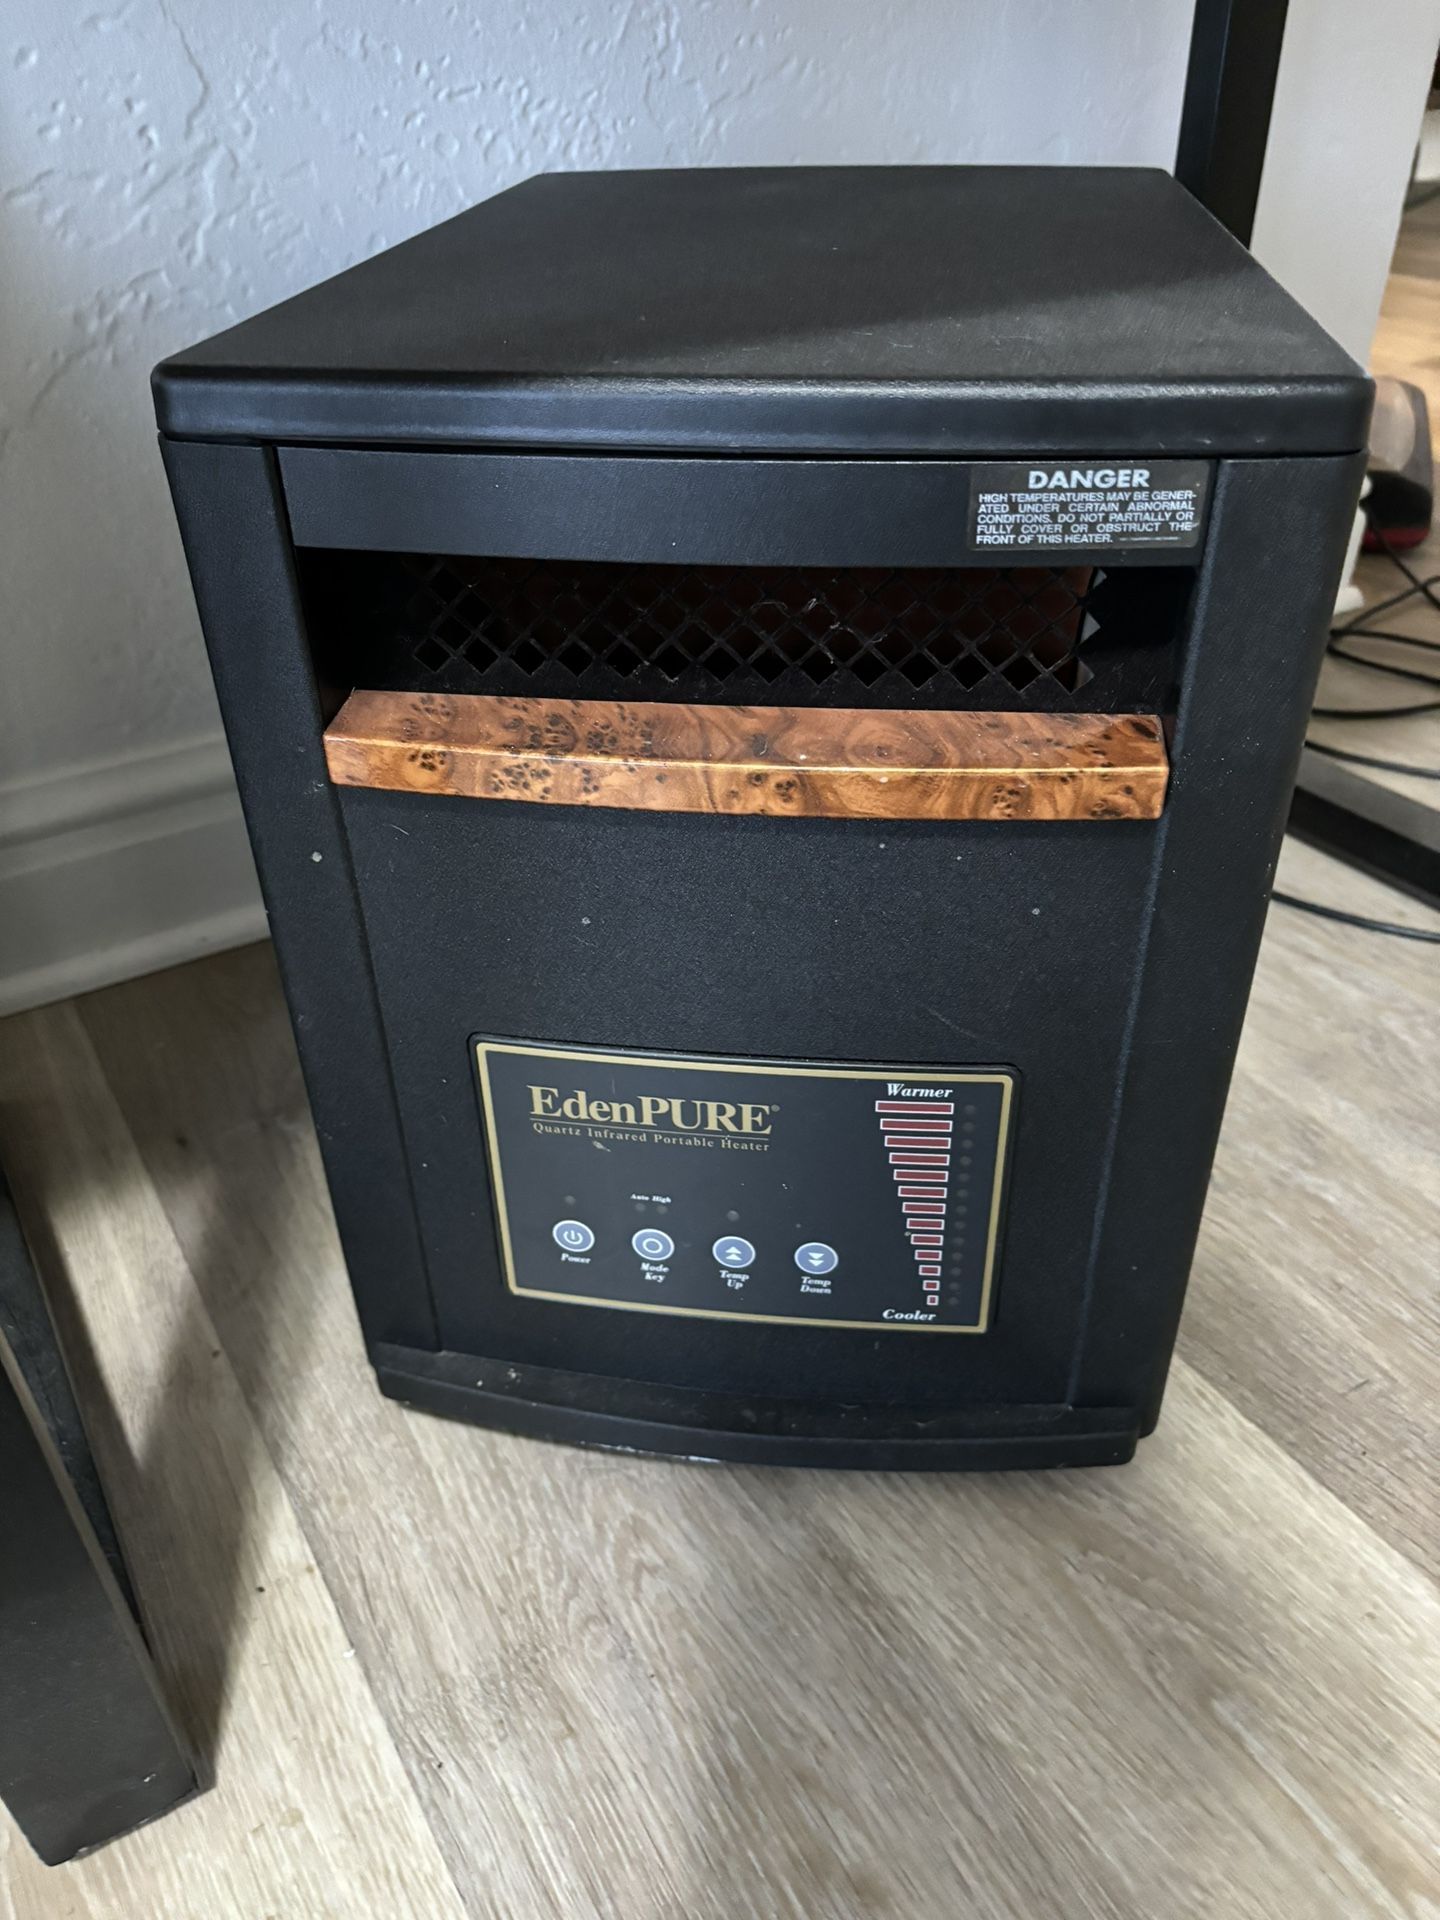 Eden Pure Portable Heater $50